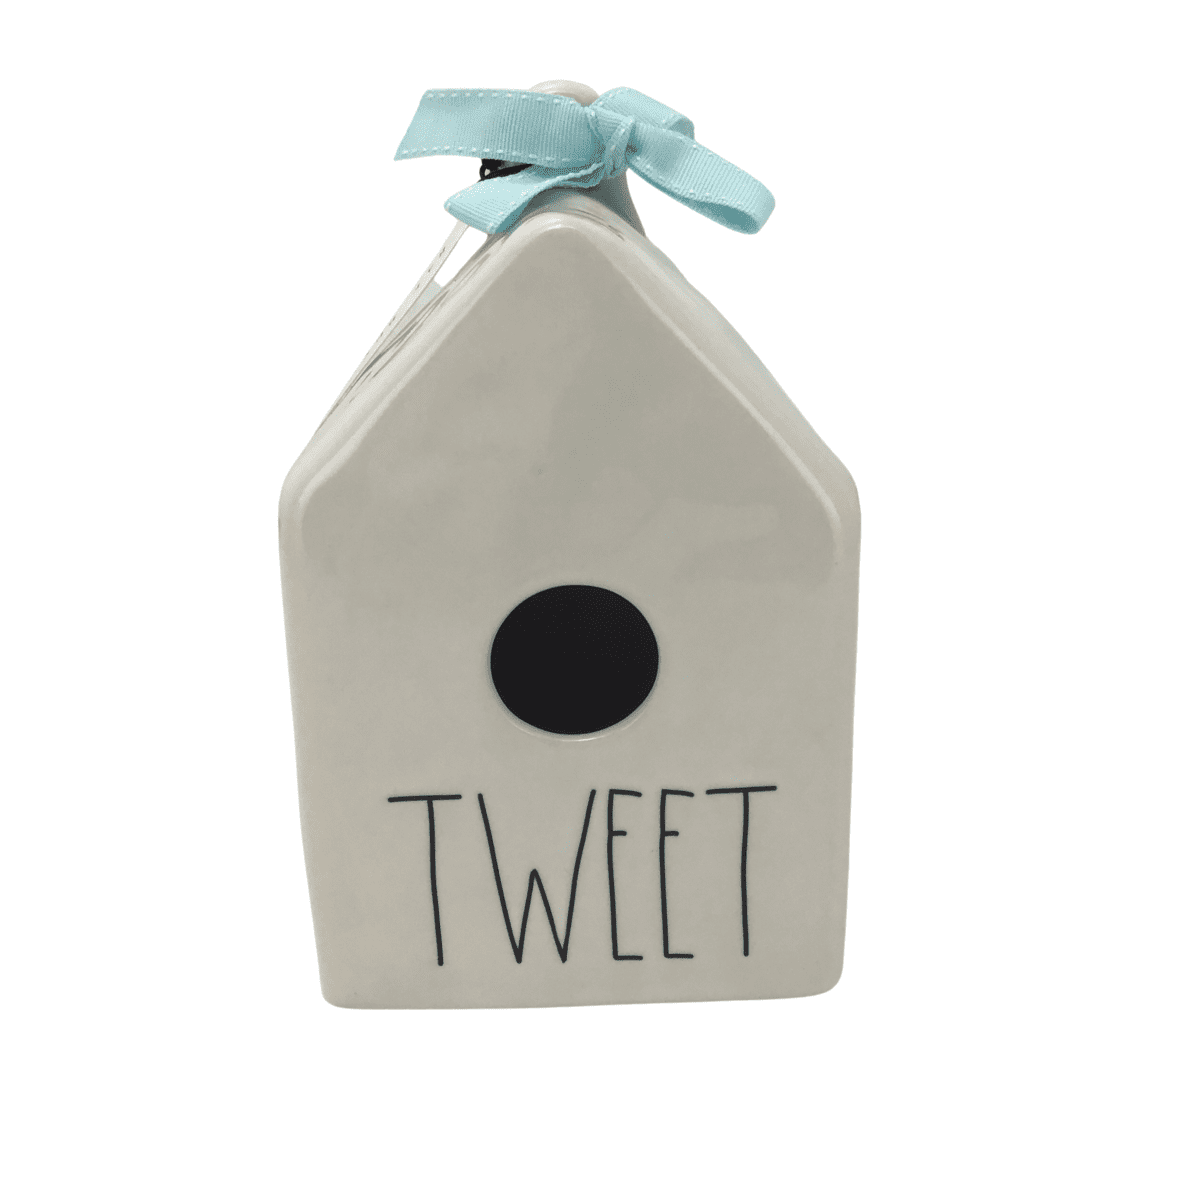 Rae Dunn Tweet ceramic Birdhouse Home Accent_01